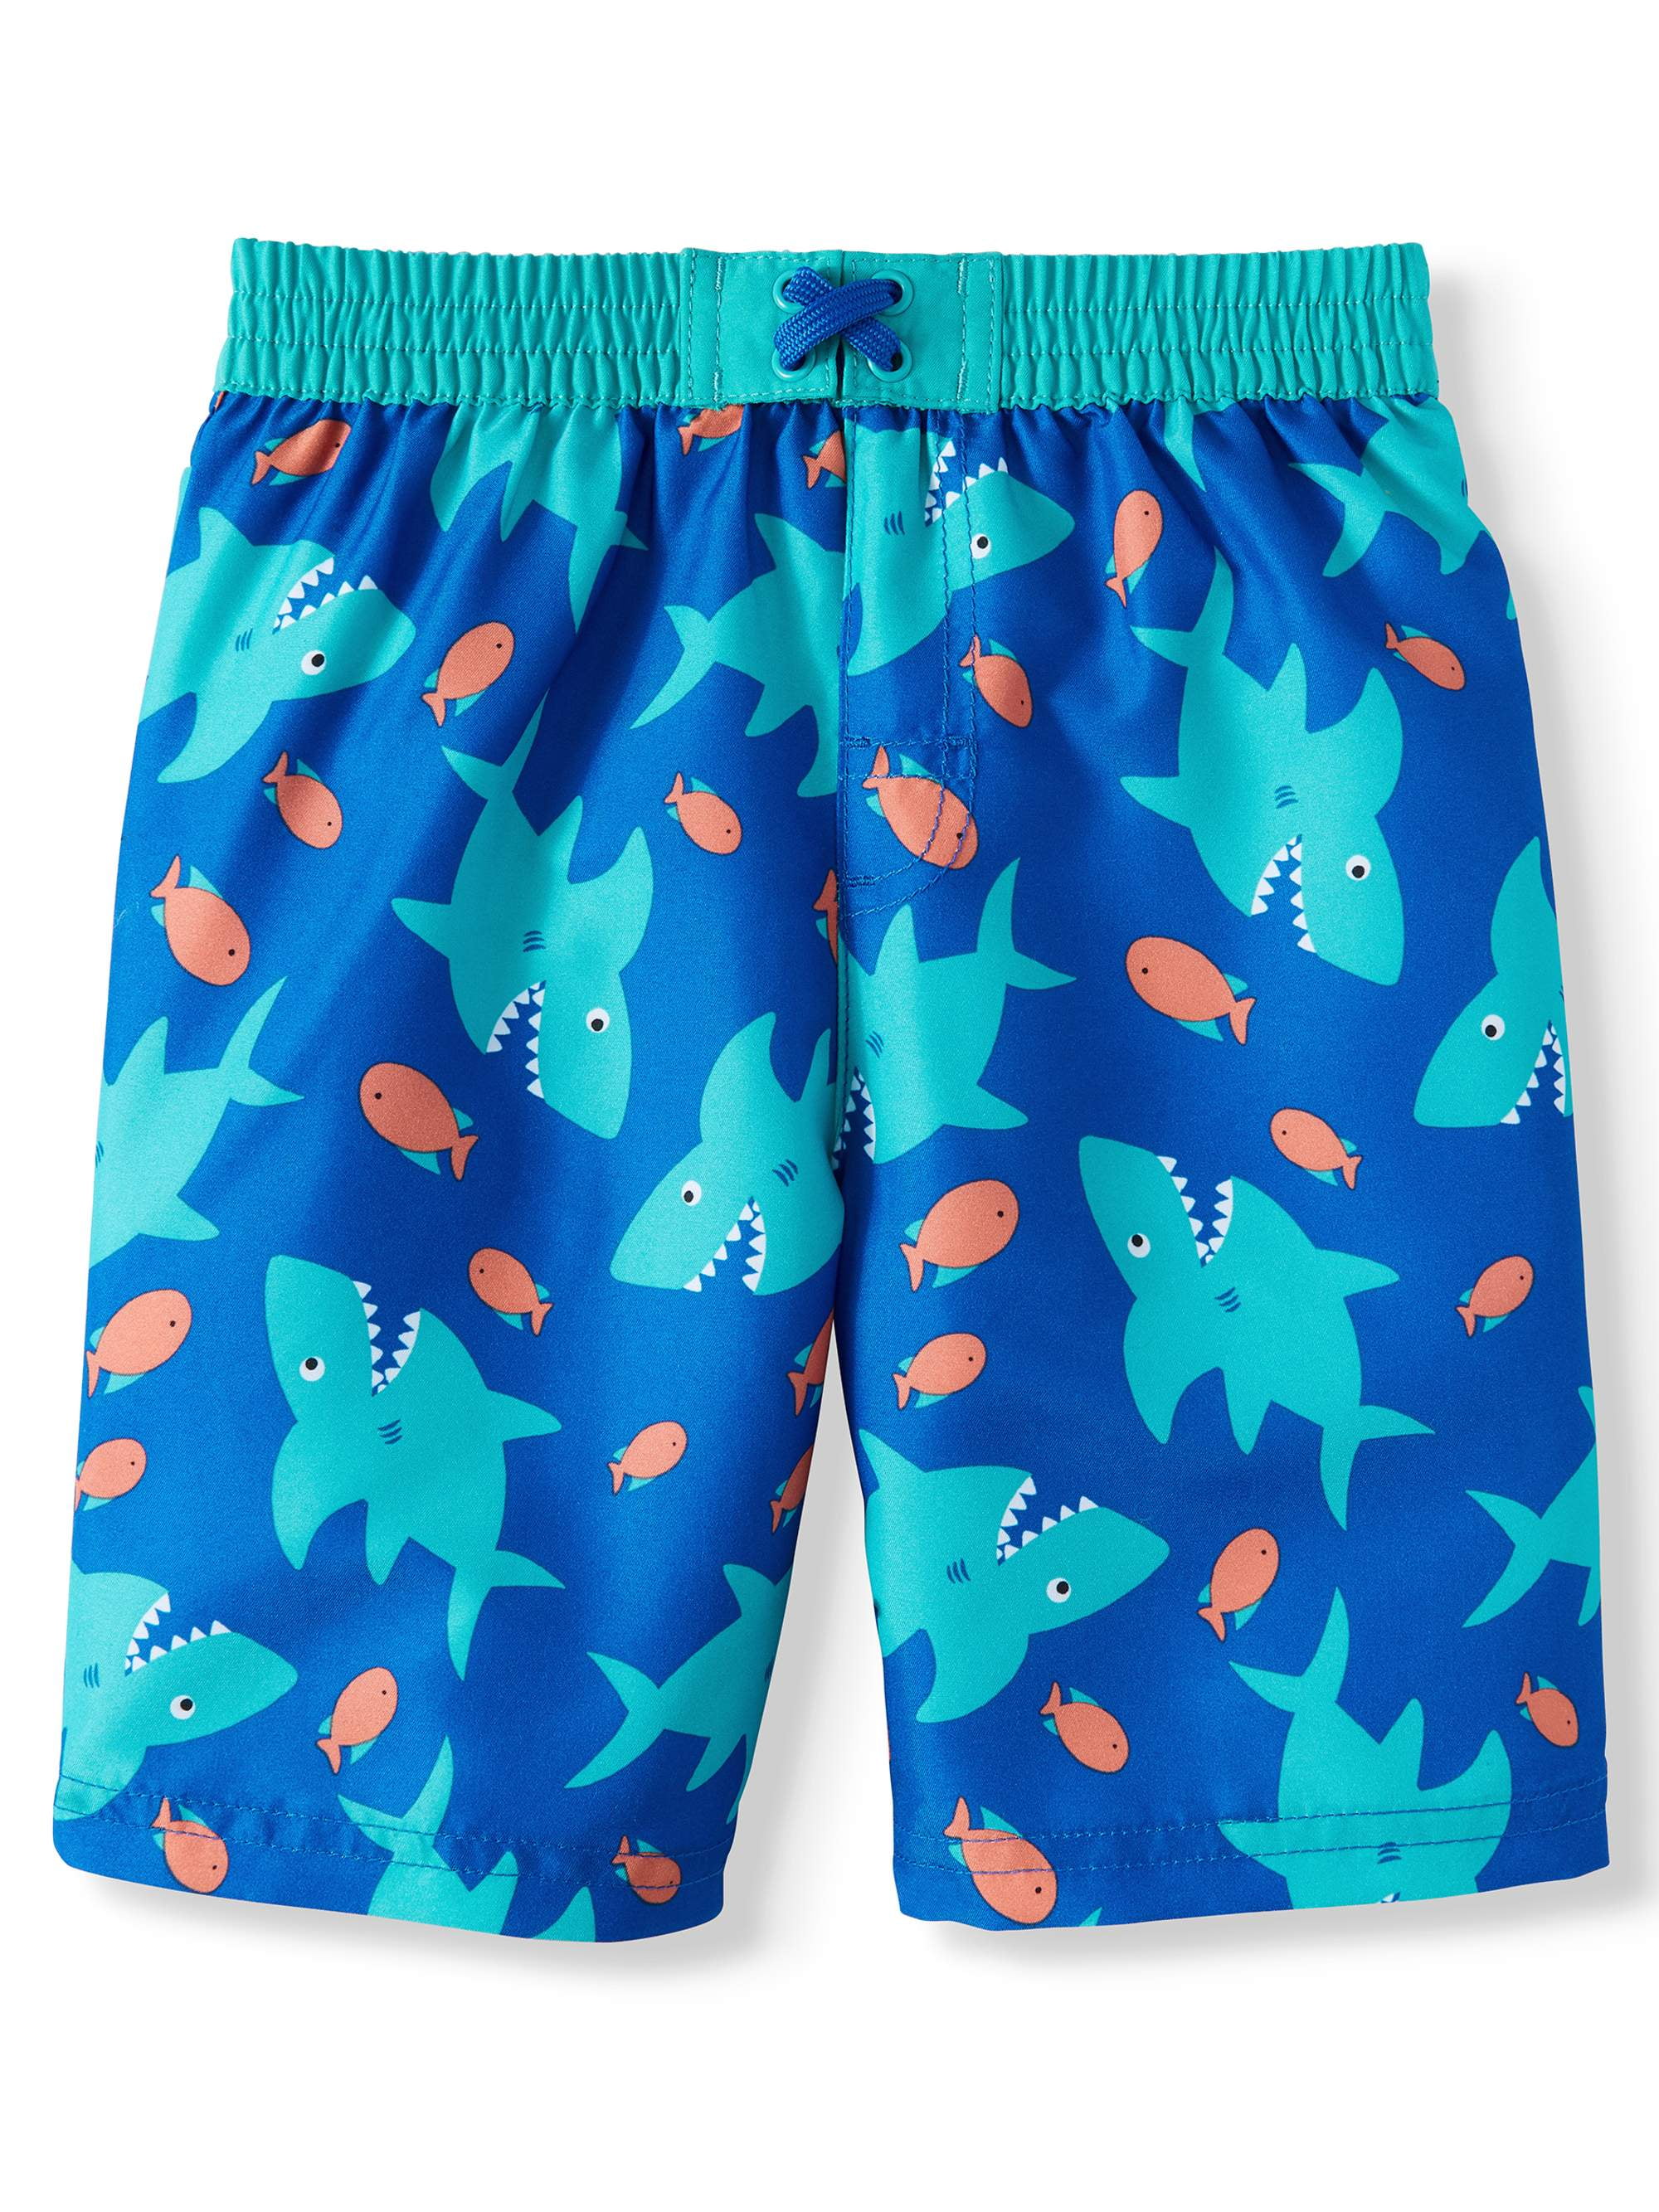 Swim Trunks (Toddler Boys) - Walmart.com